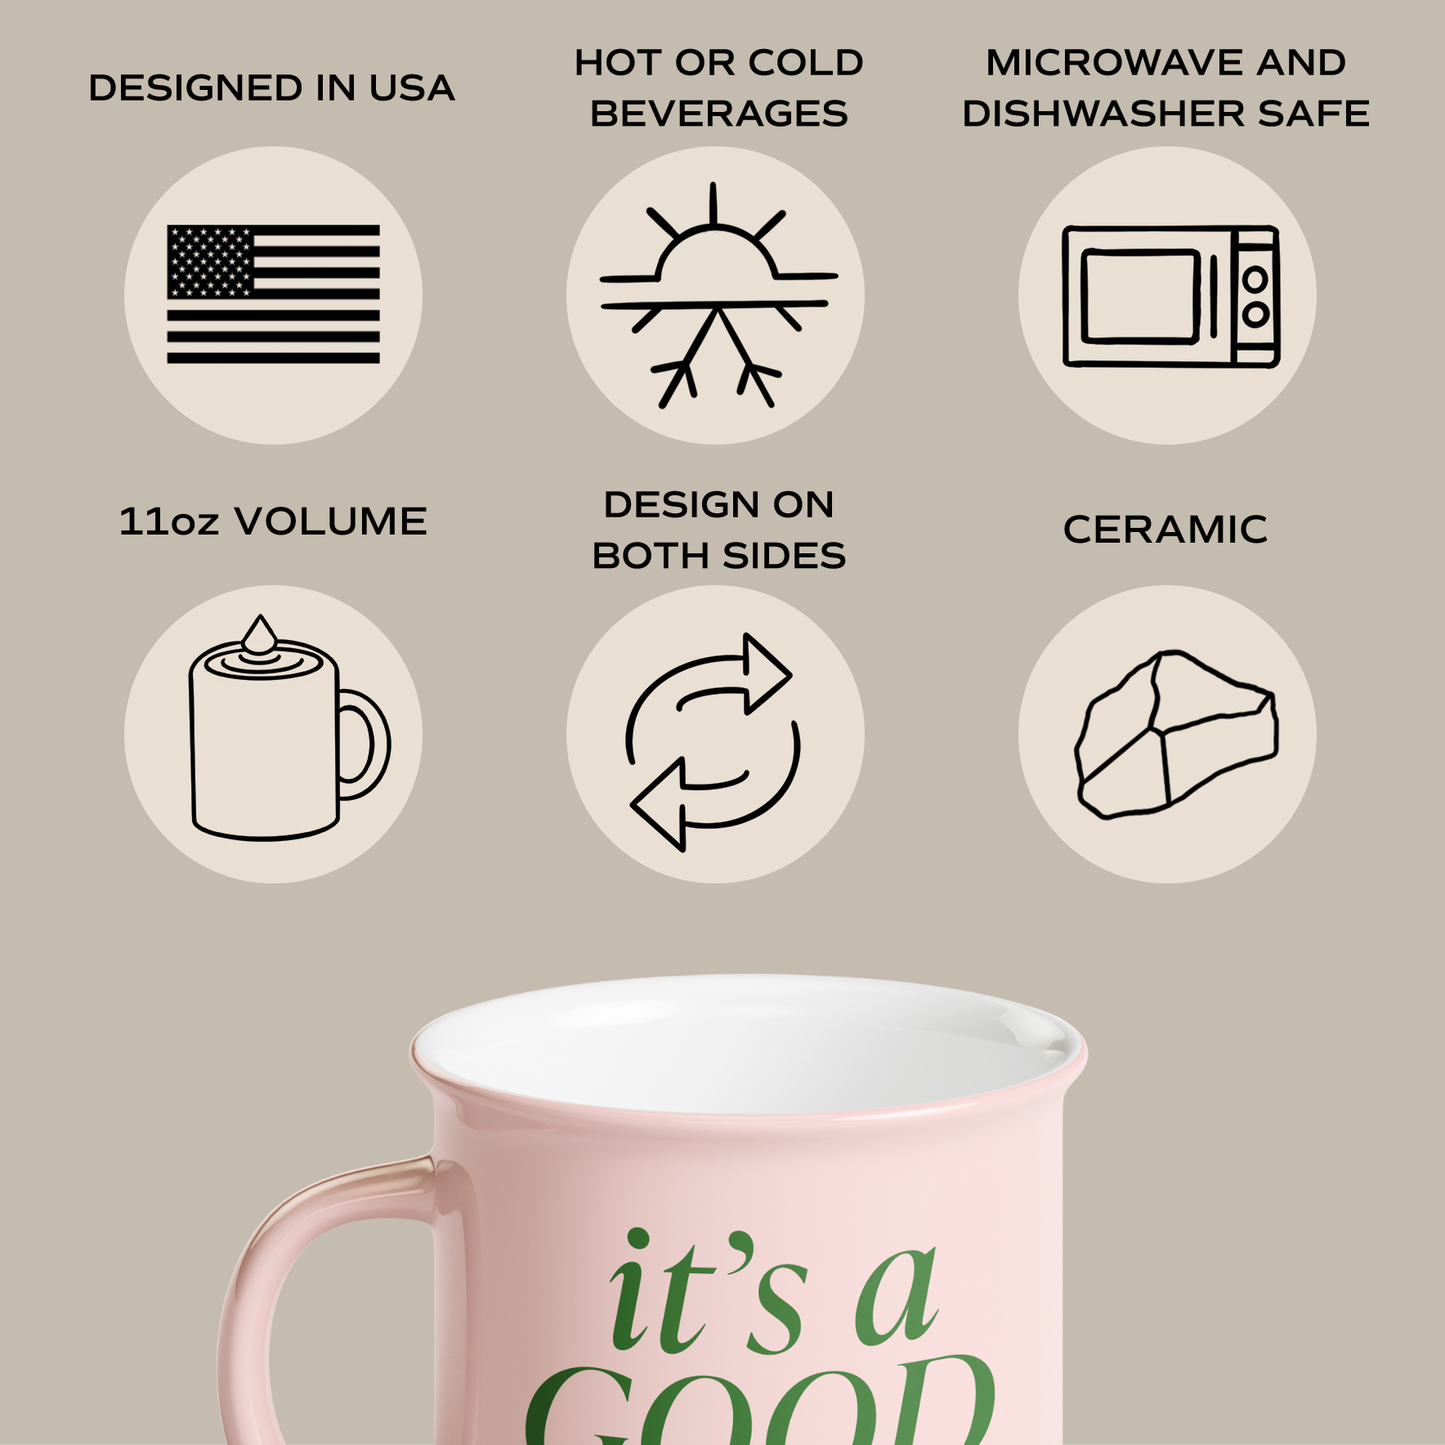 "It's A Good Day" Campfire Coffee Mug